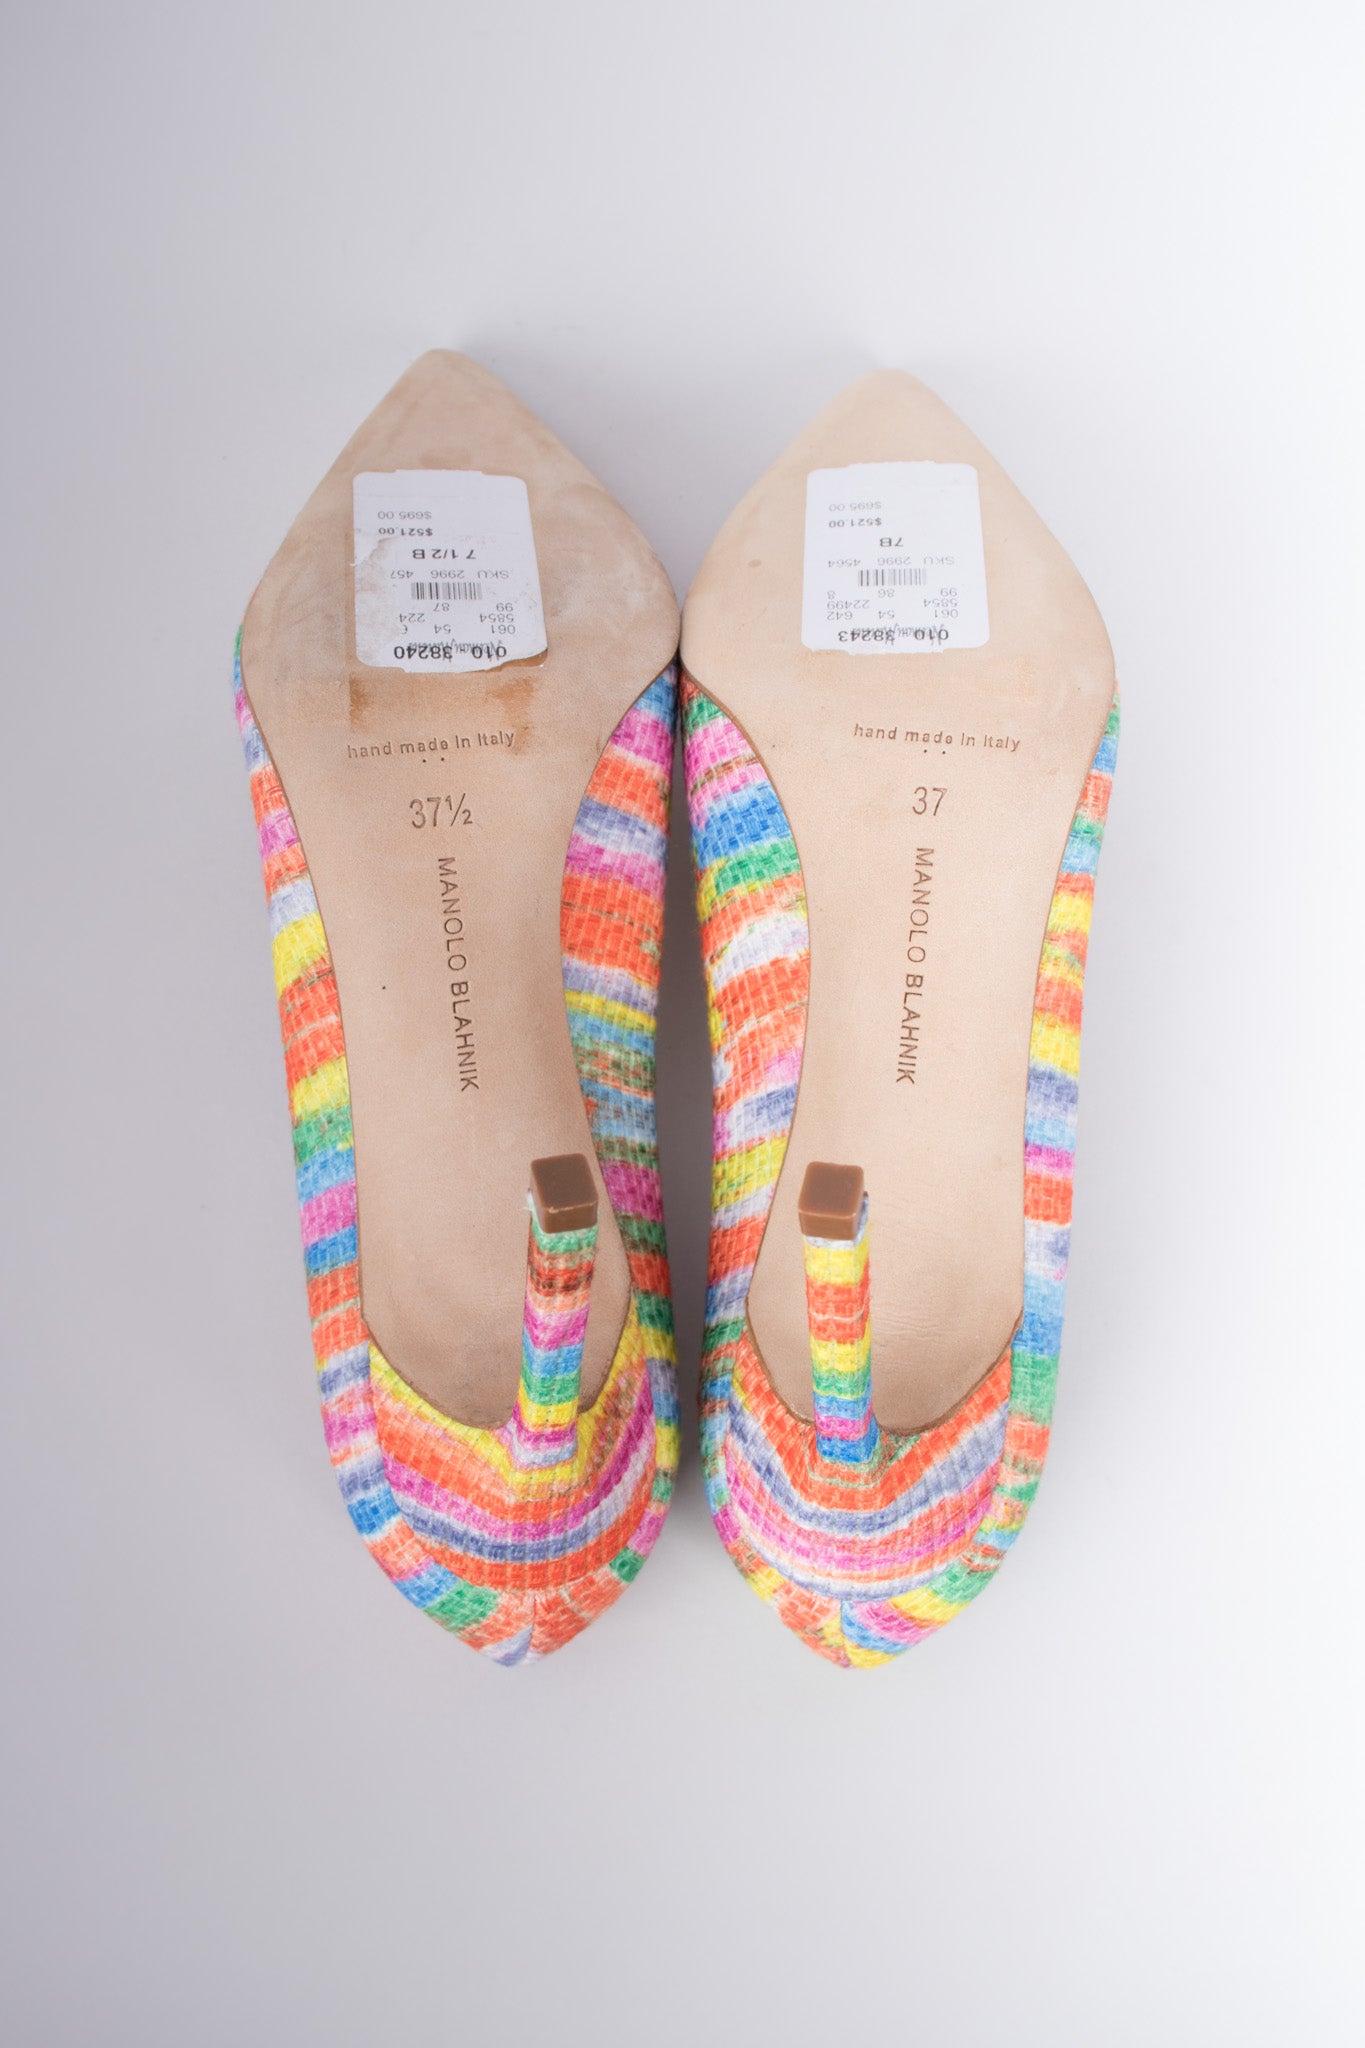 Manolo Blahnik Textured Fabric Watercolor Stripe Heels